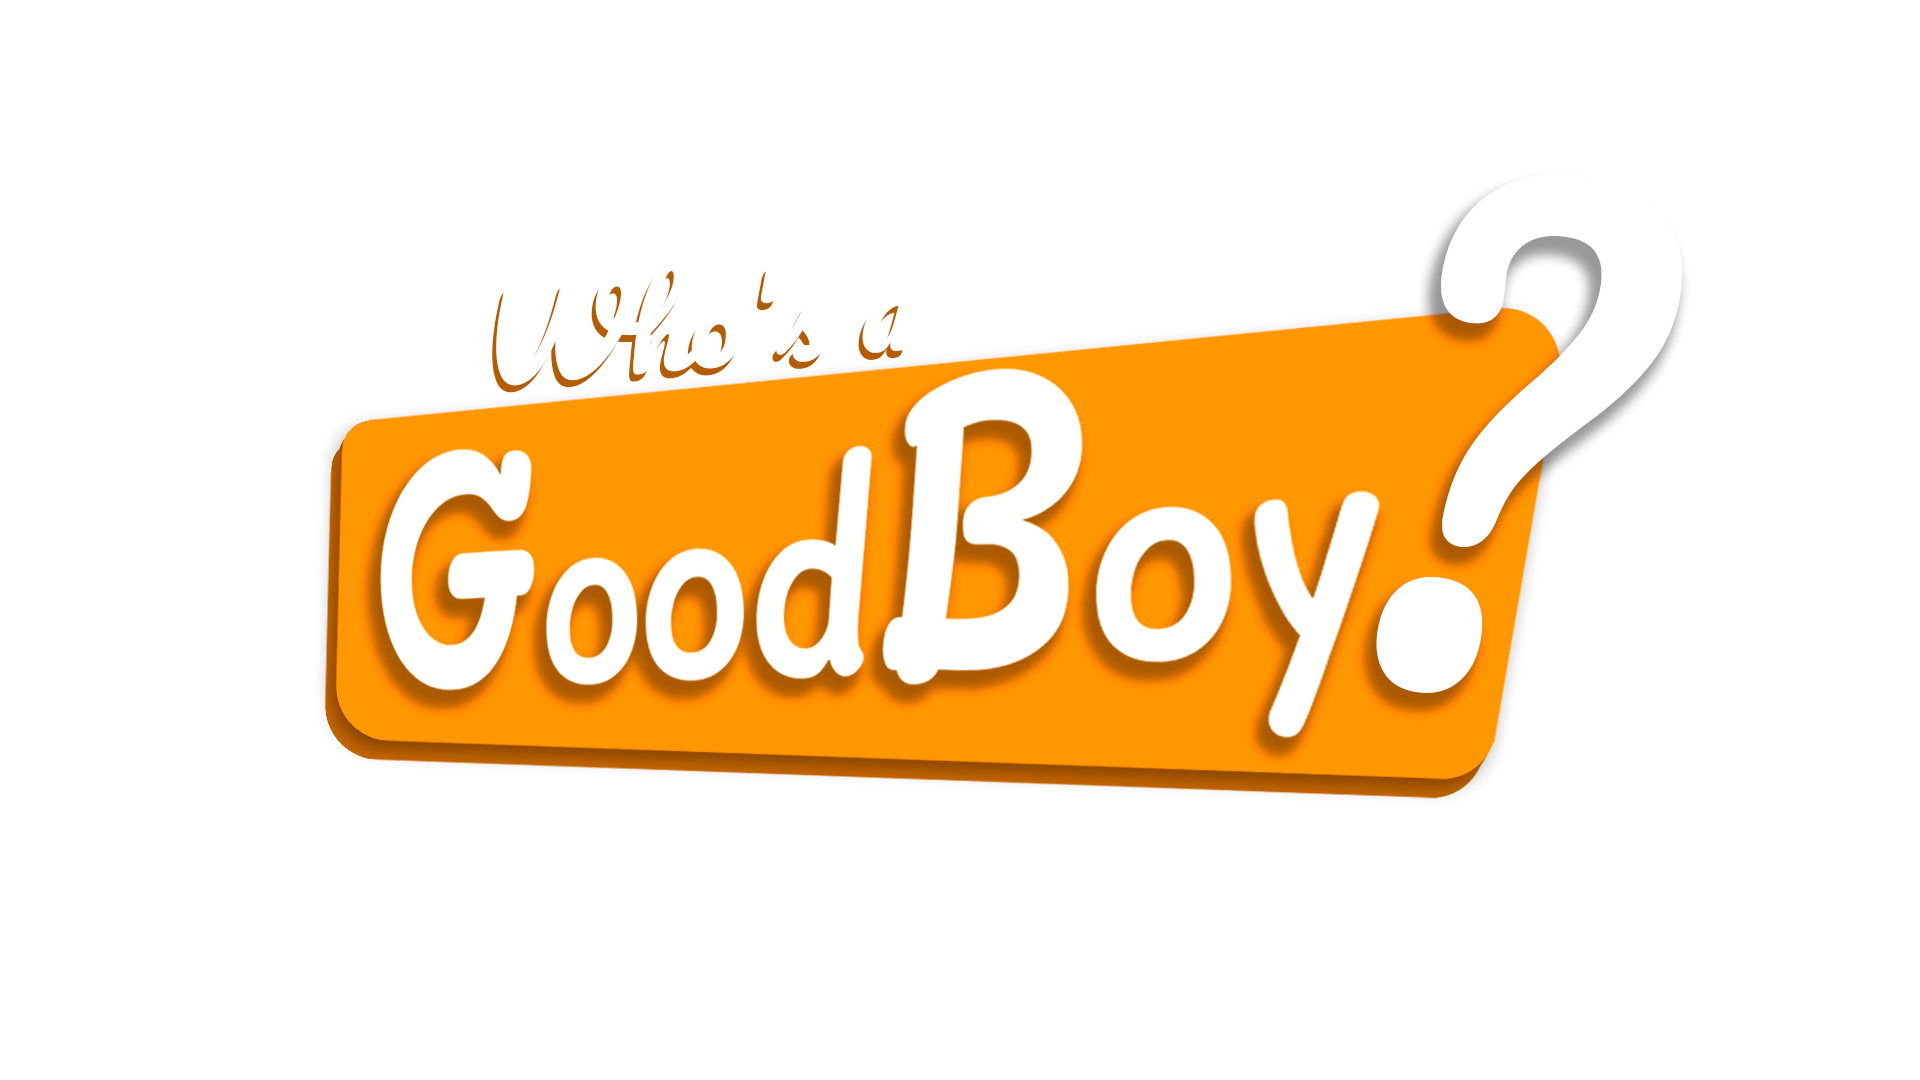 Who's a Good Boy?